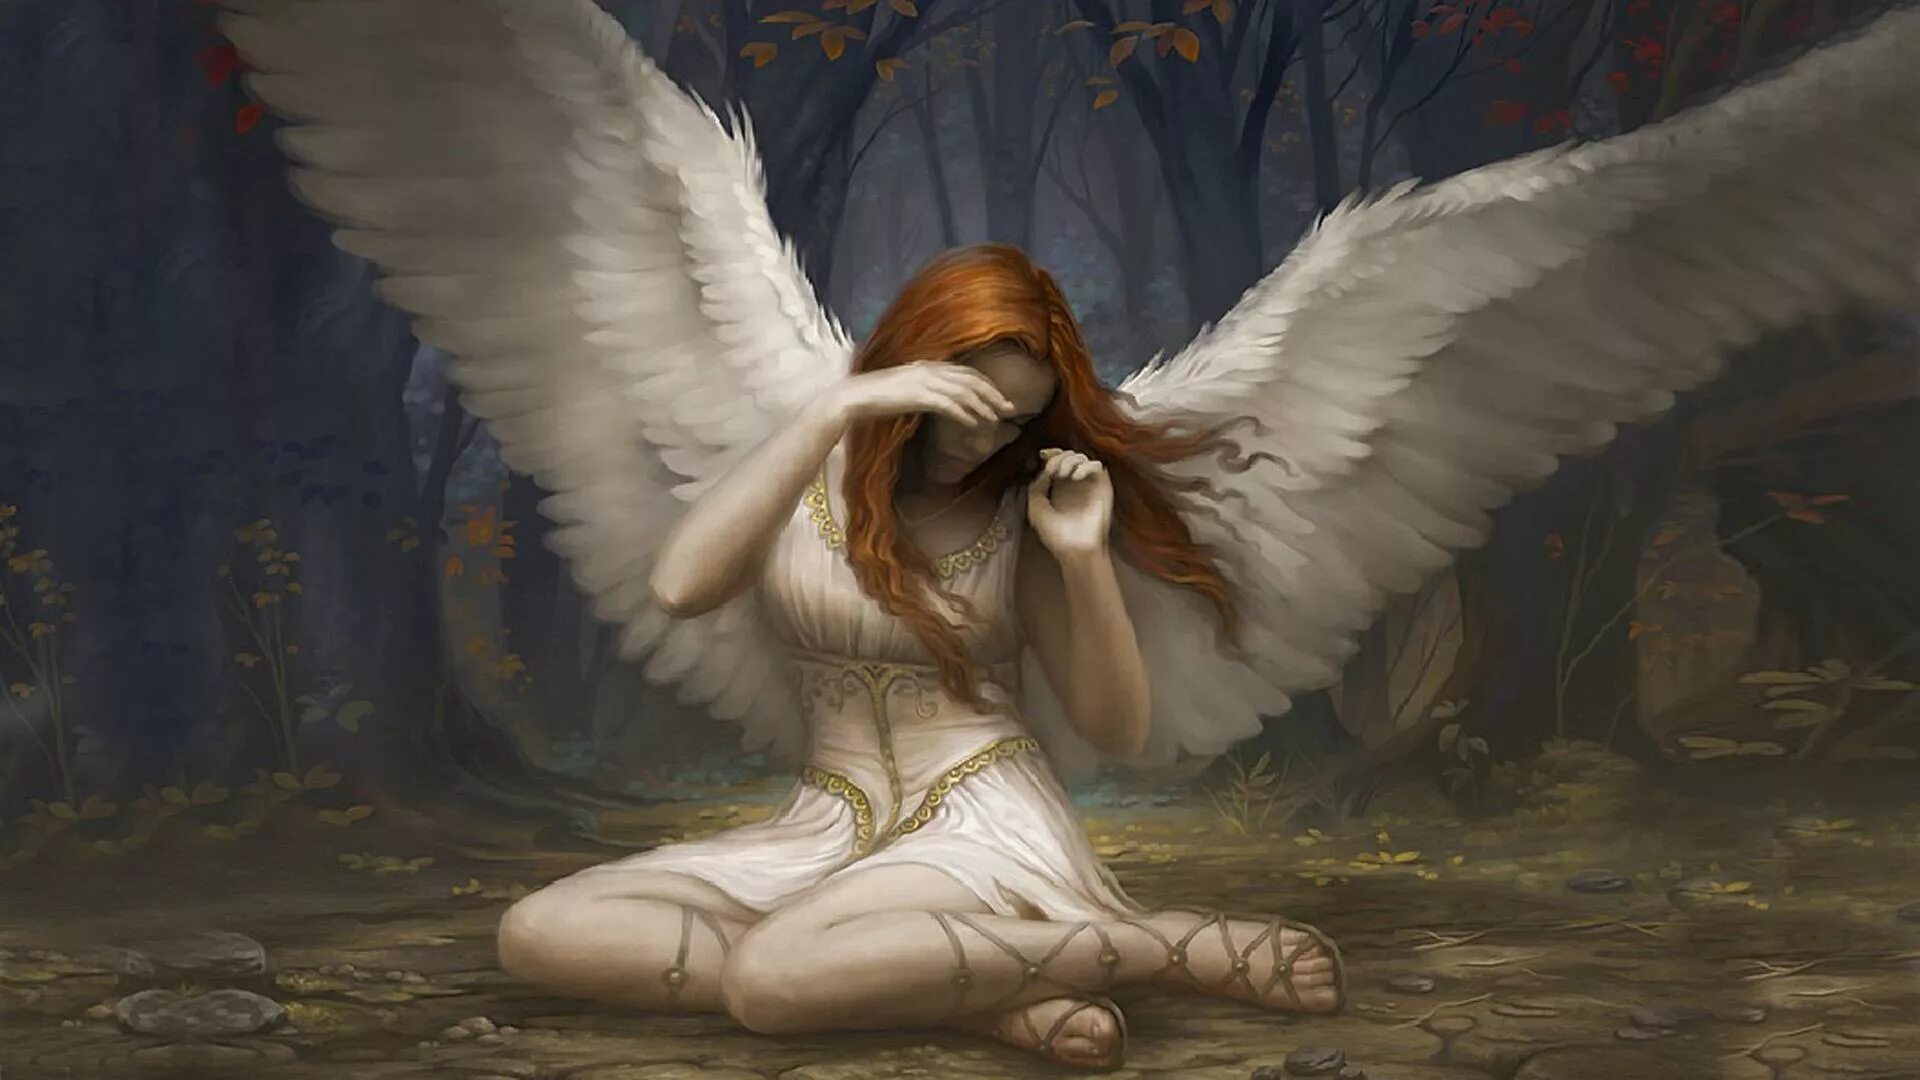 Девушка с крыльями. Ангел фэнтези. Девушка - ангел. Фэнтези девушки с крыльями. Бывает крылатым